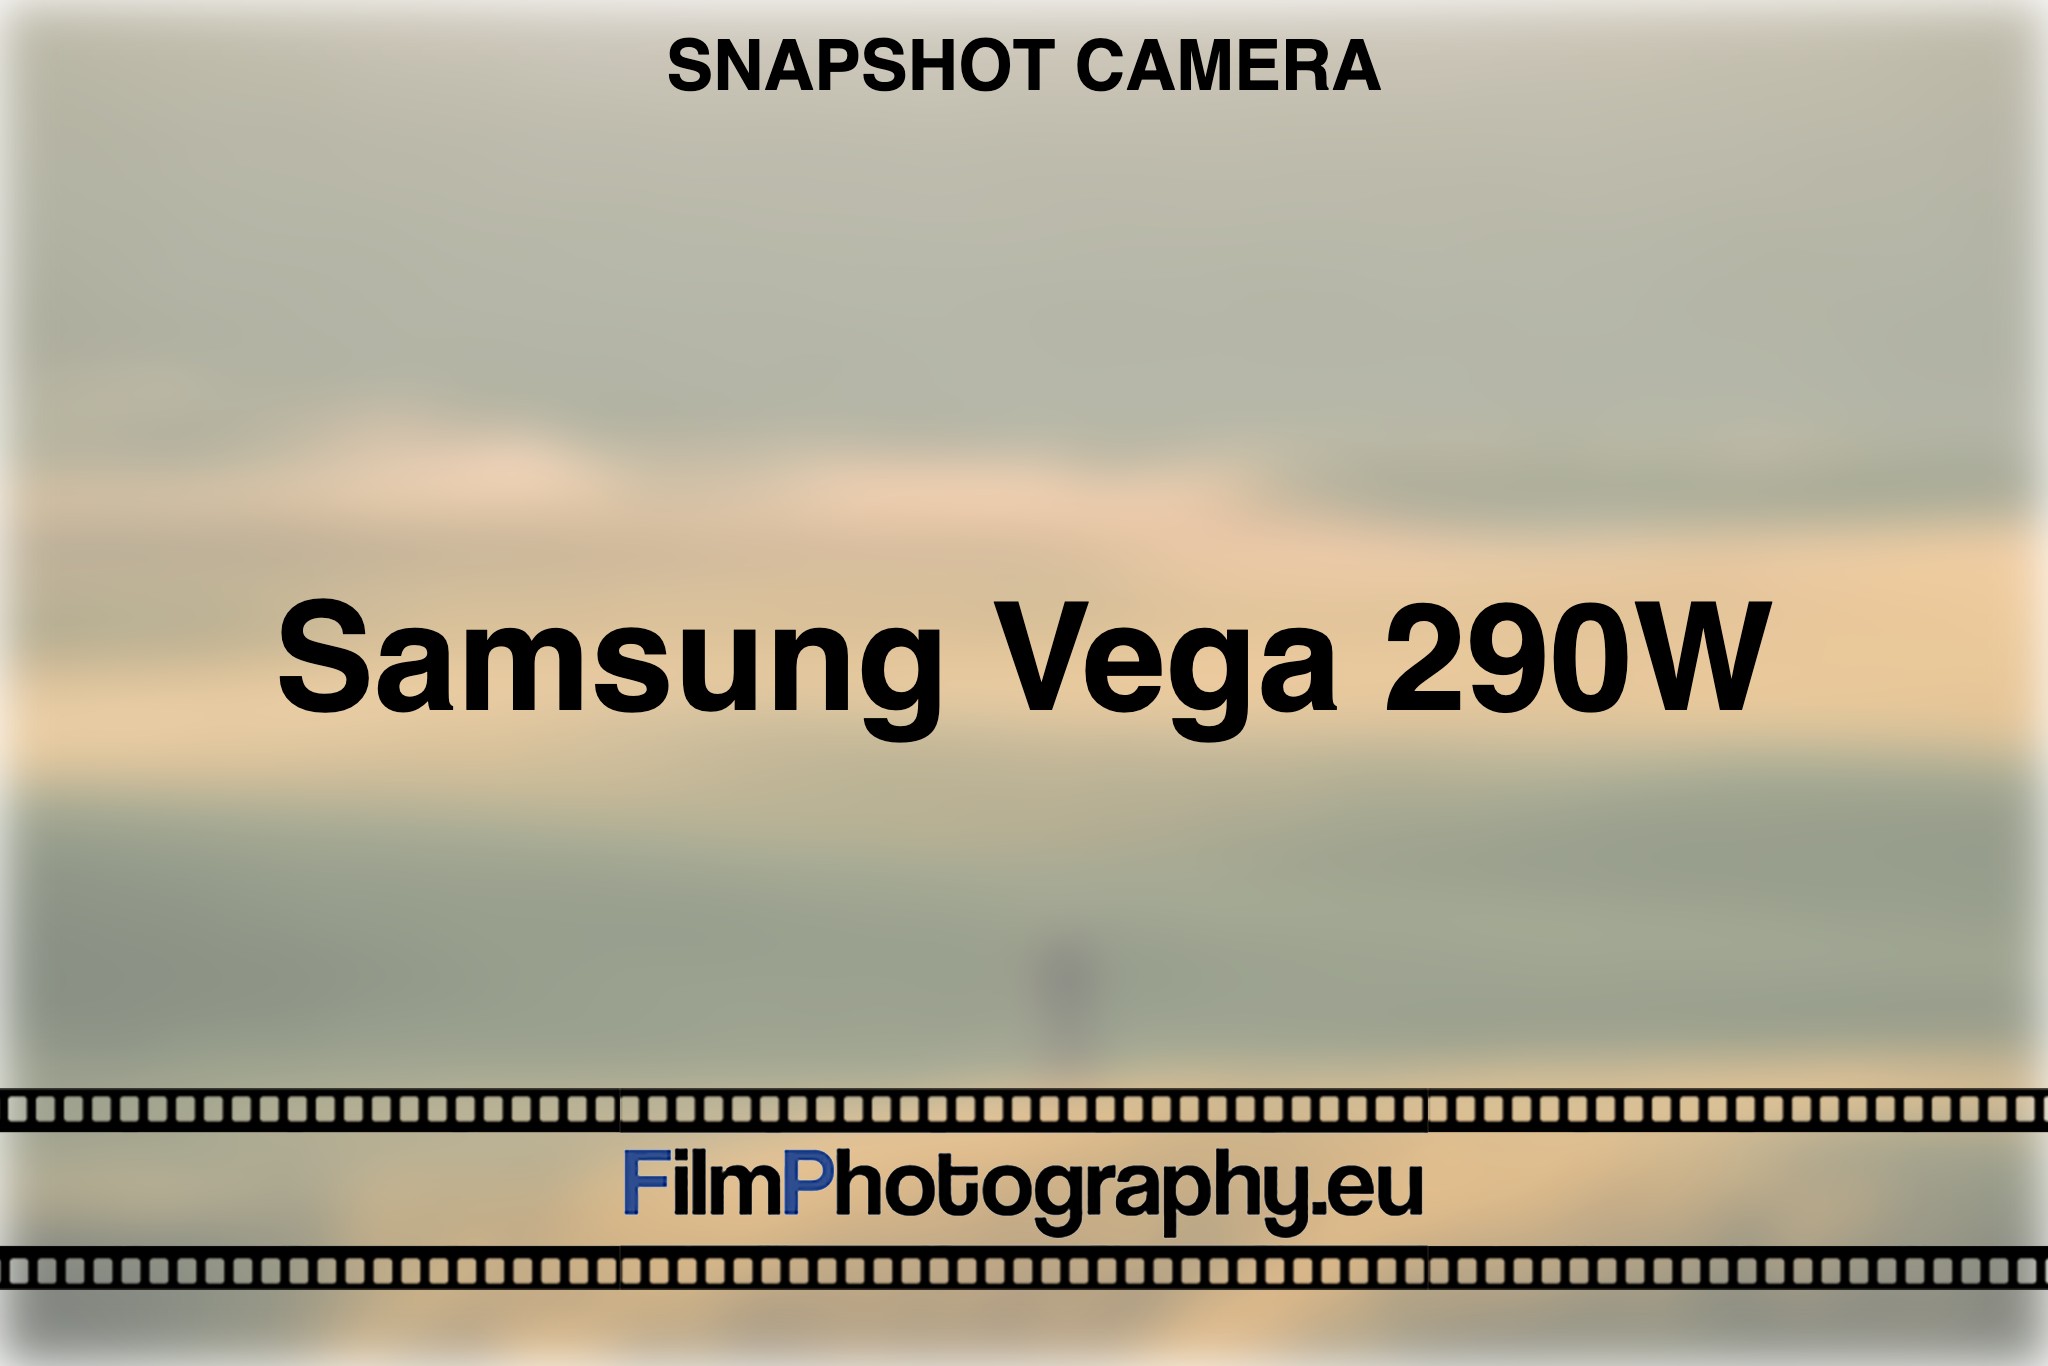 samsung-vega-290w-snapshot-camera-bnv